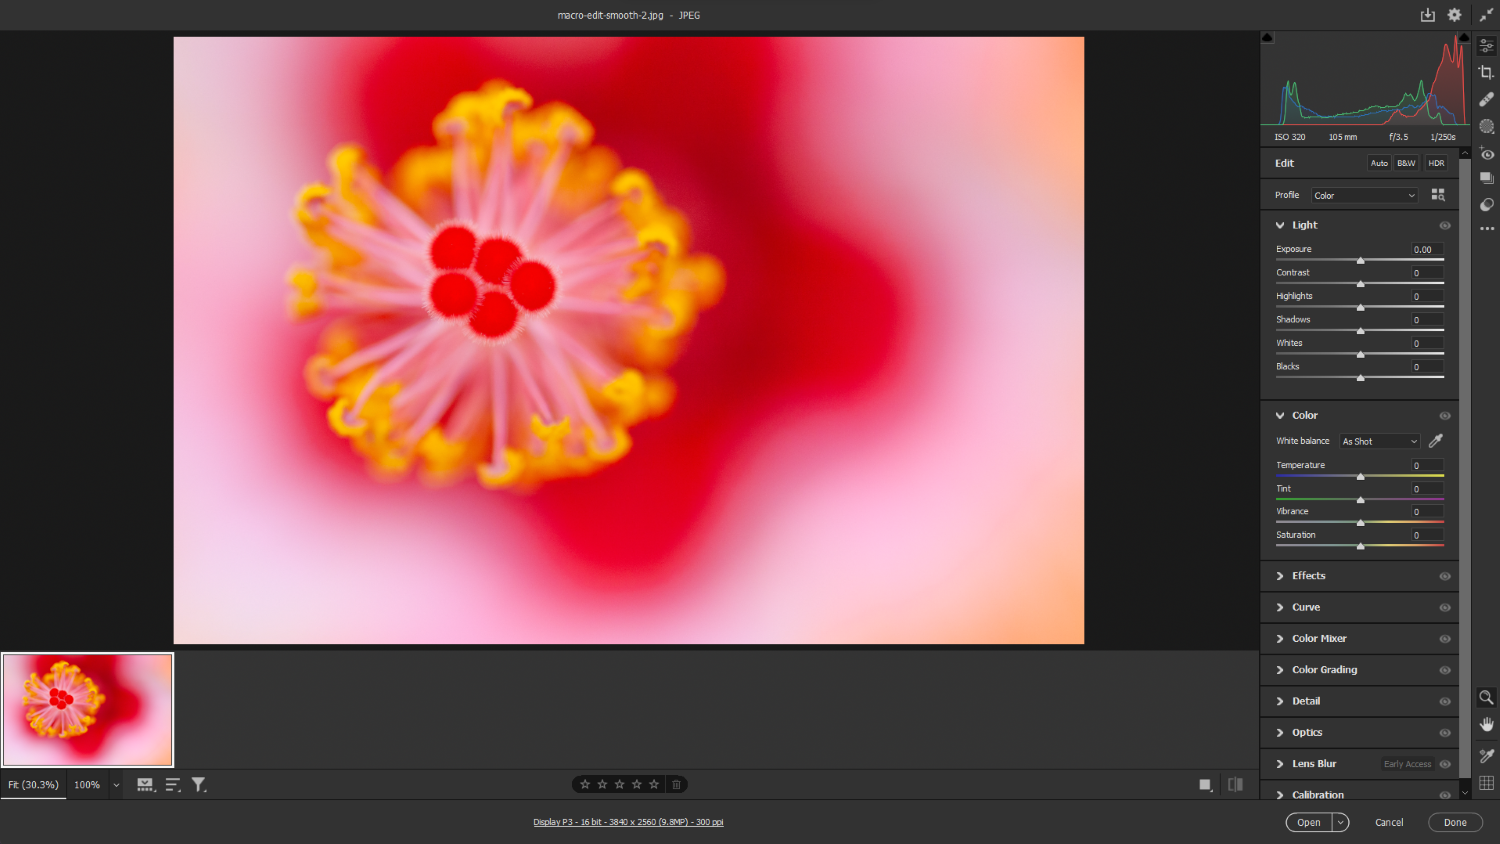 Adobe Camera Raw accessed directly from Adobe Bridge